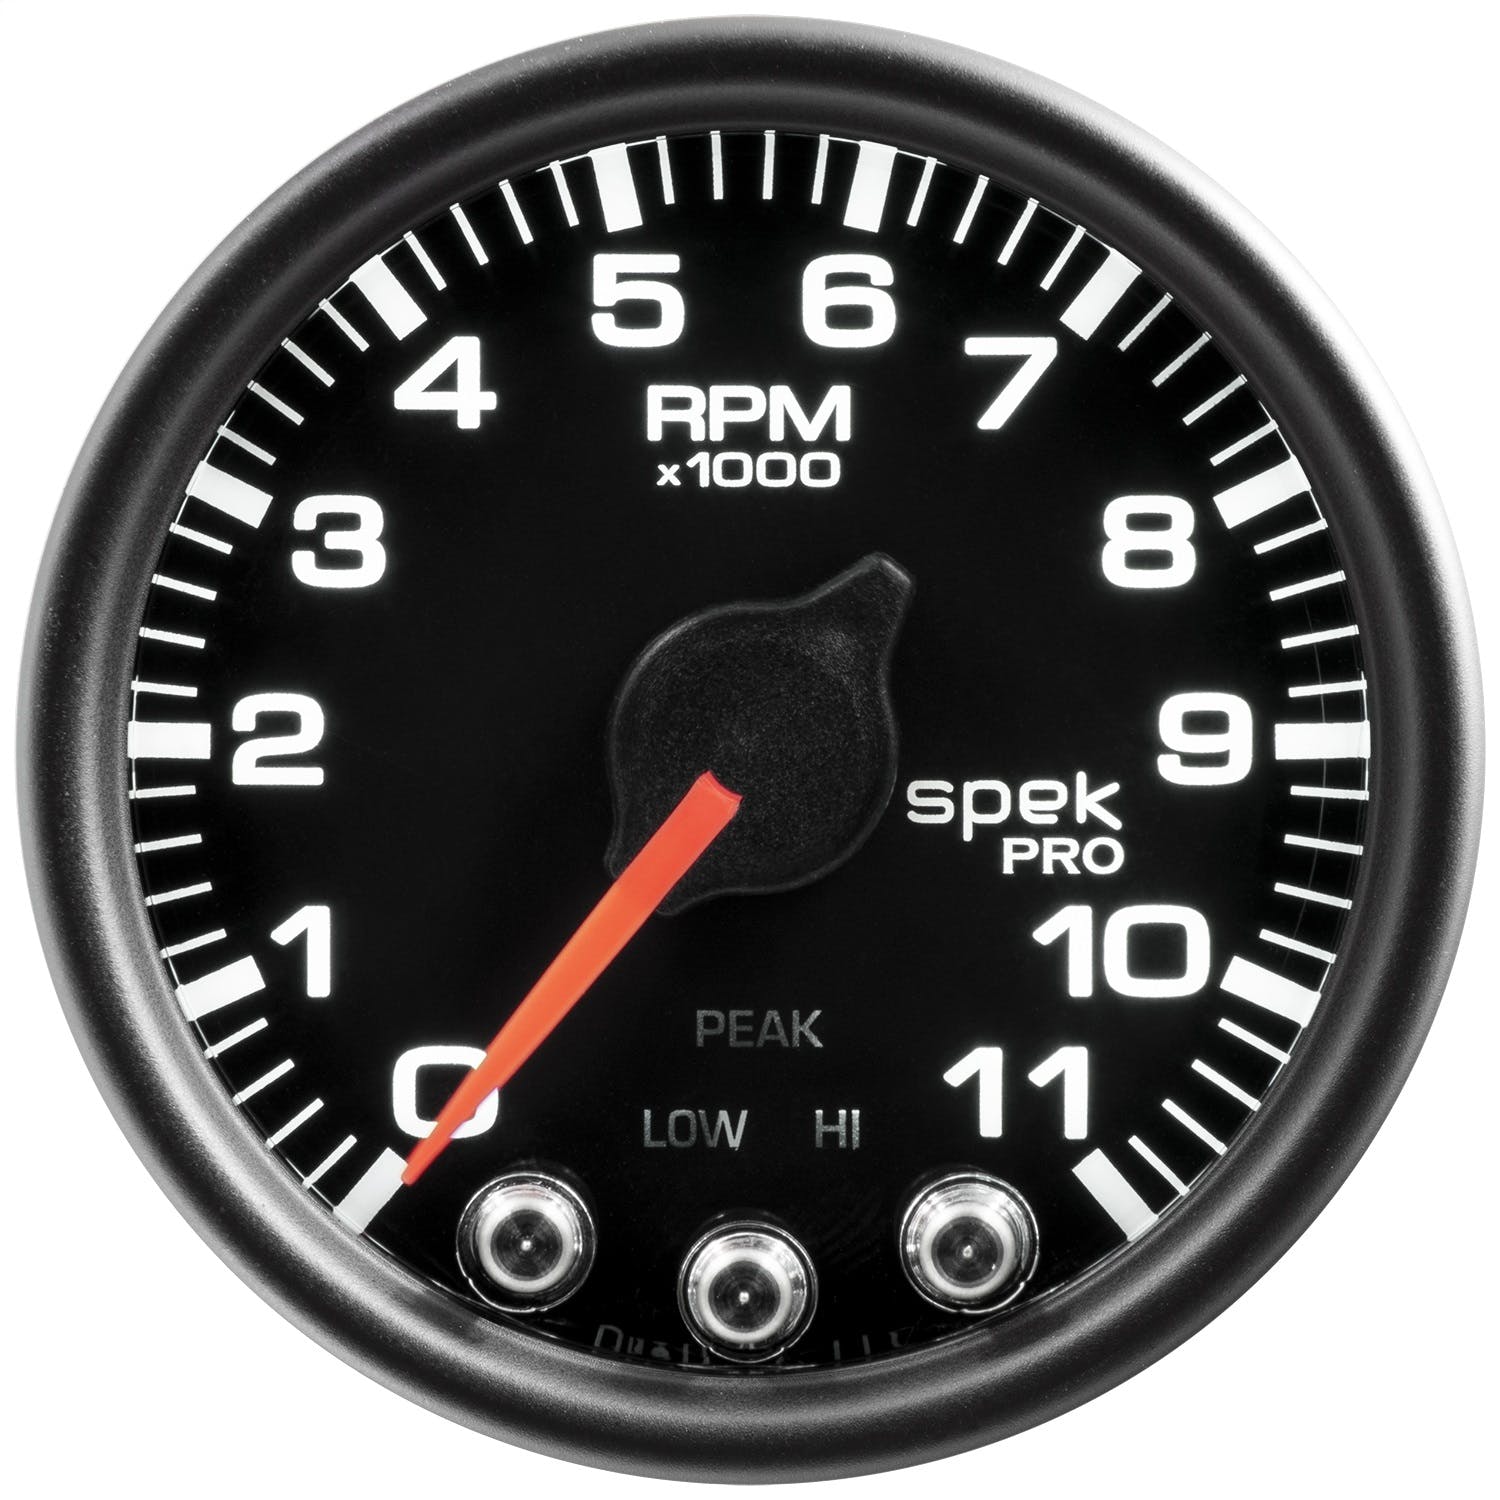 AutoMeter Products P33632 Tach 2in. 11k RPM w Shift Light/Pk Mem Blk/Blk Spek